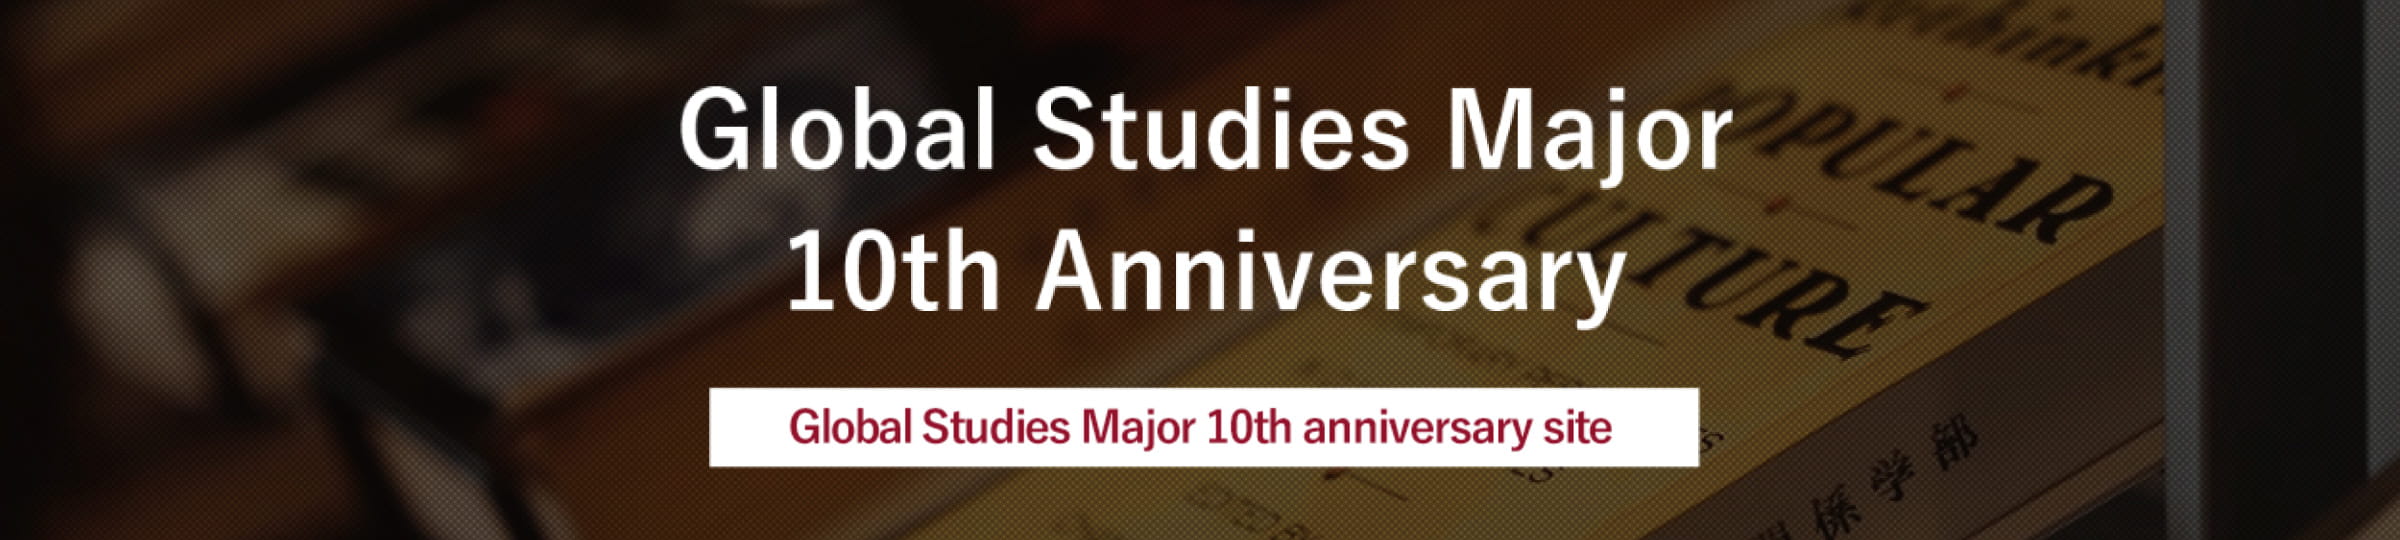 Global Studies Major 10th anniversary site